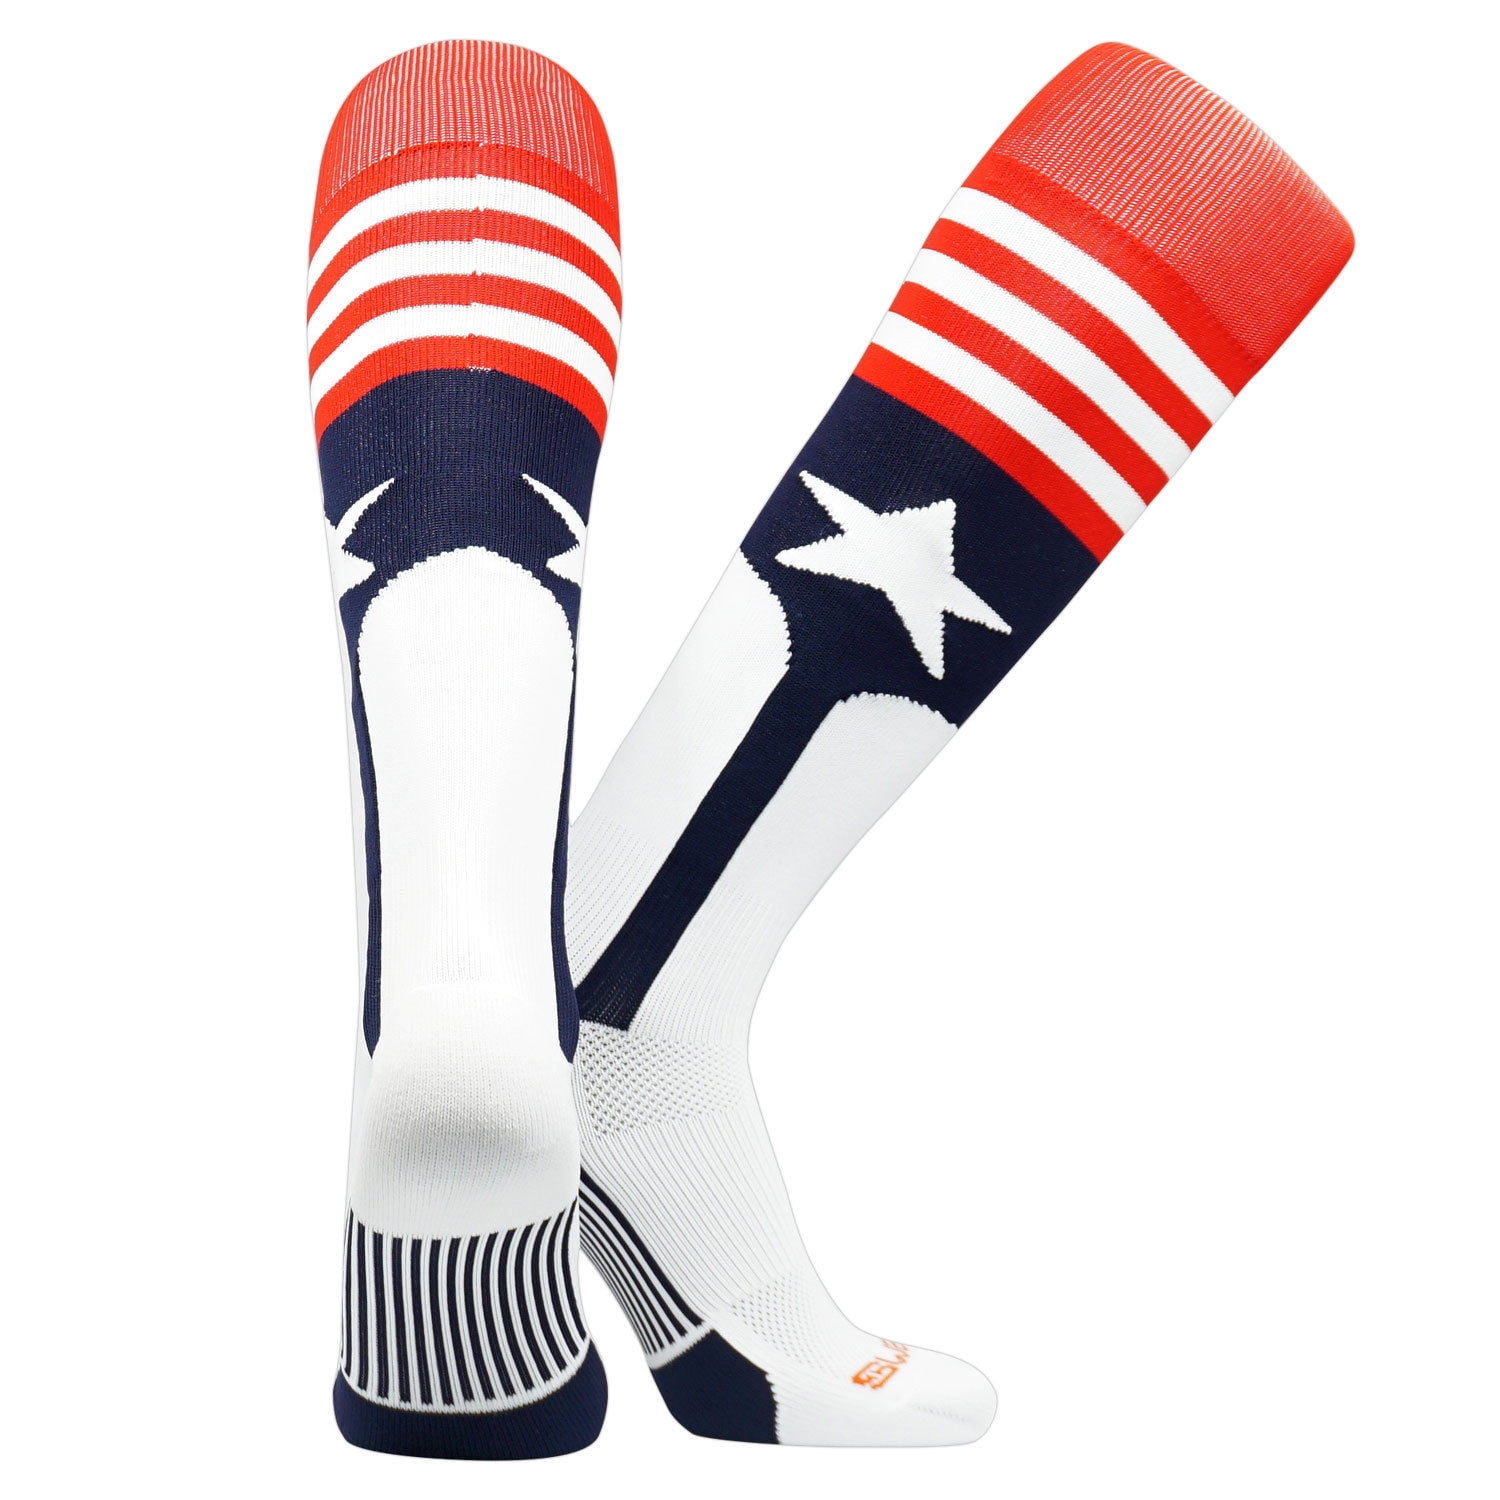 TCK Baseball Stirrup Socks with Stripes 